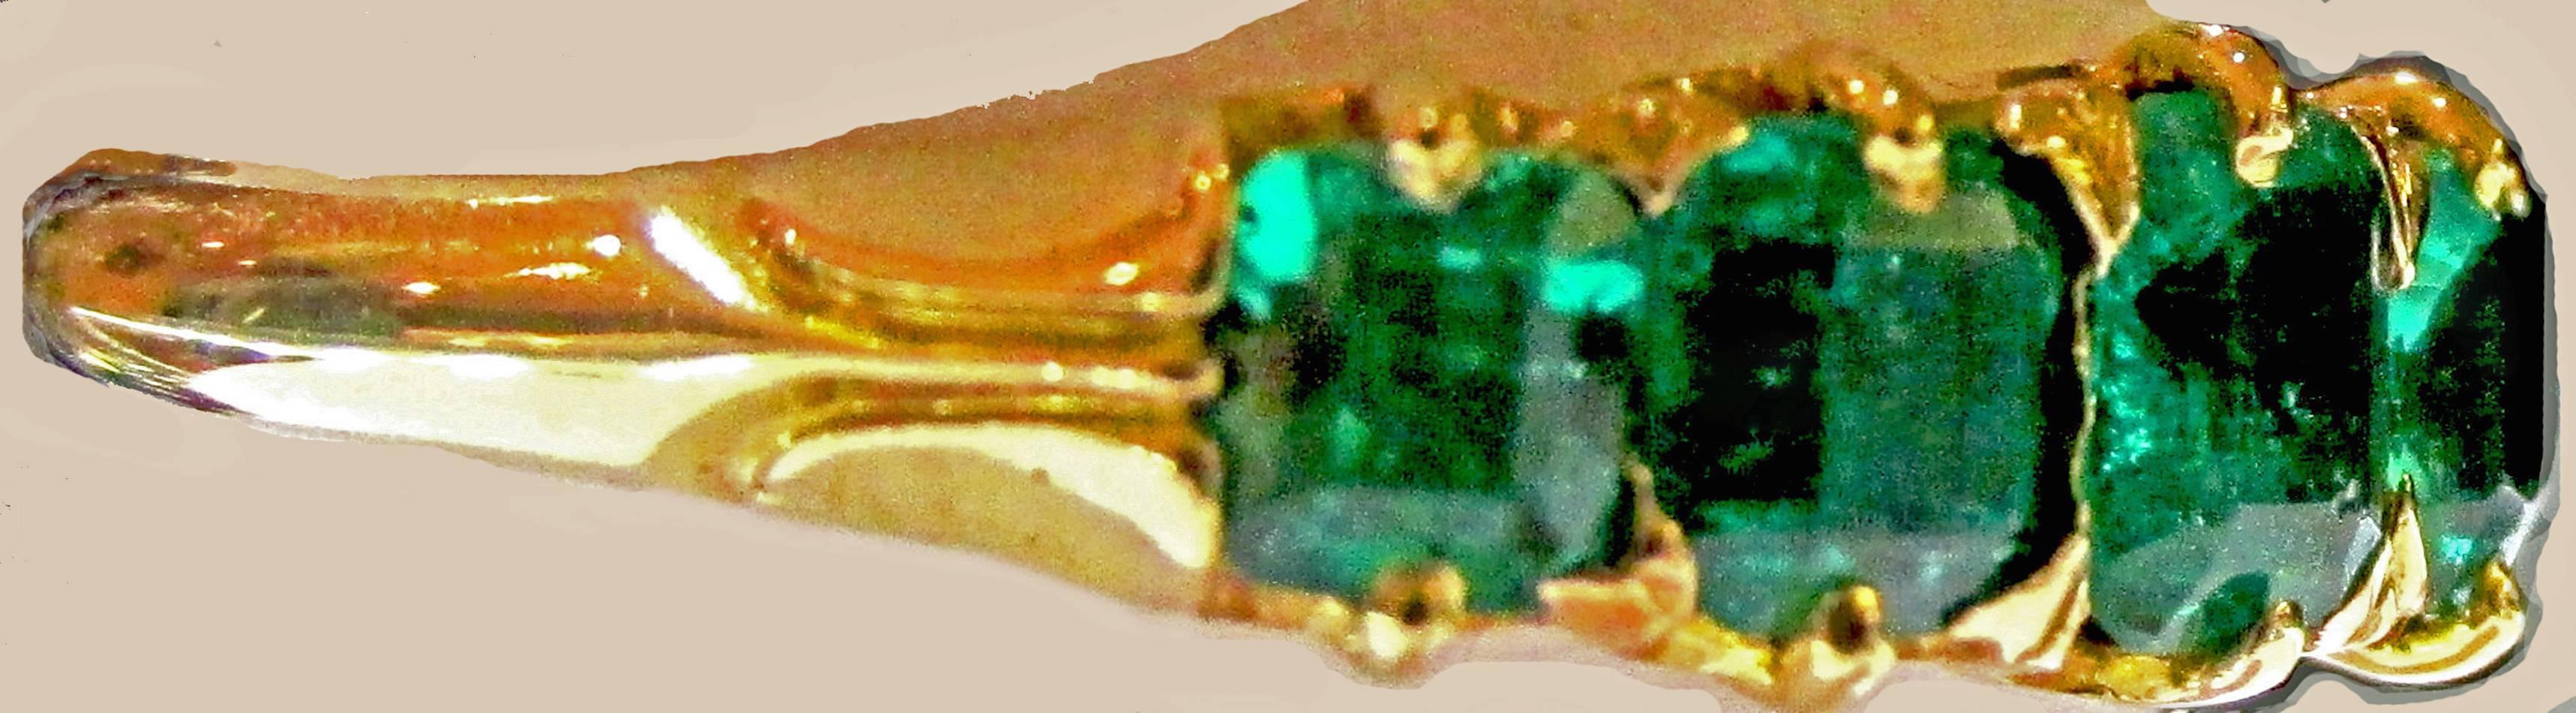 five stone emerald ring